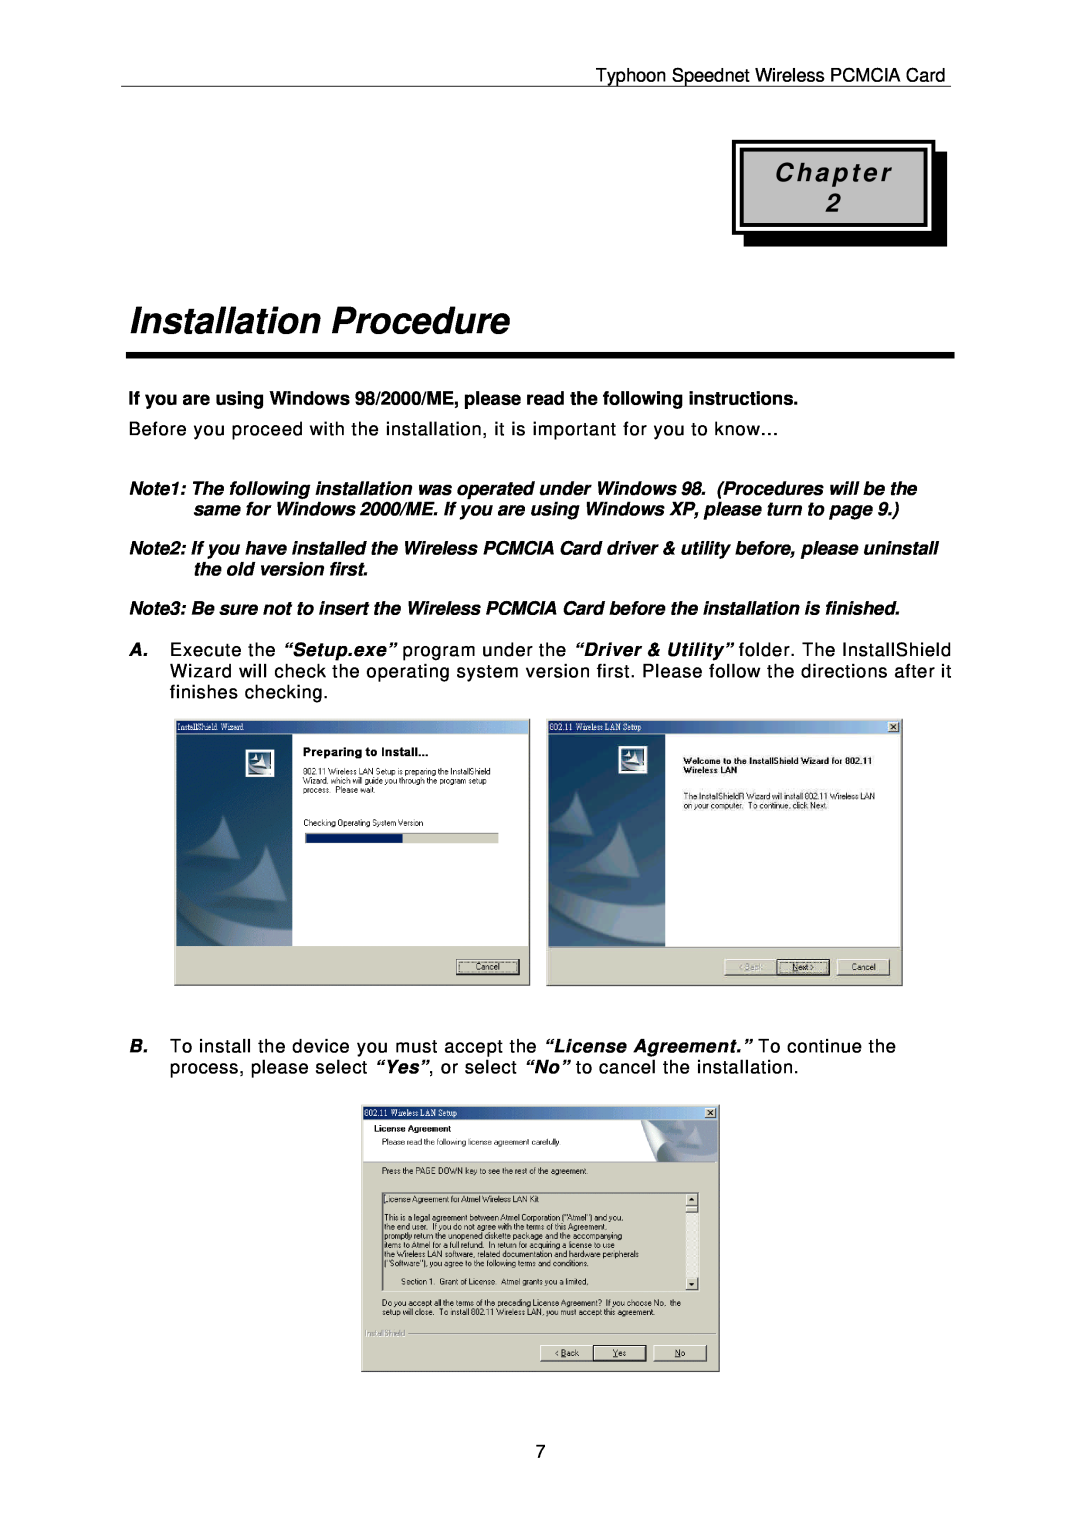 ANUBIS SPEEDNET WIRELESS PCMCIA CARD instruction manual Installation Procedure, C h a p t e r 